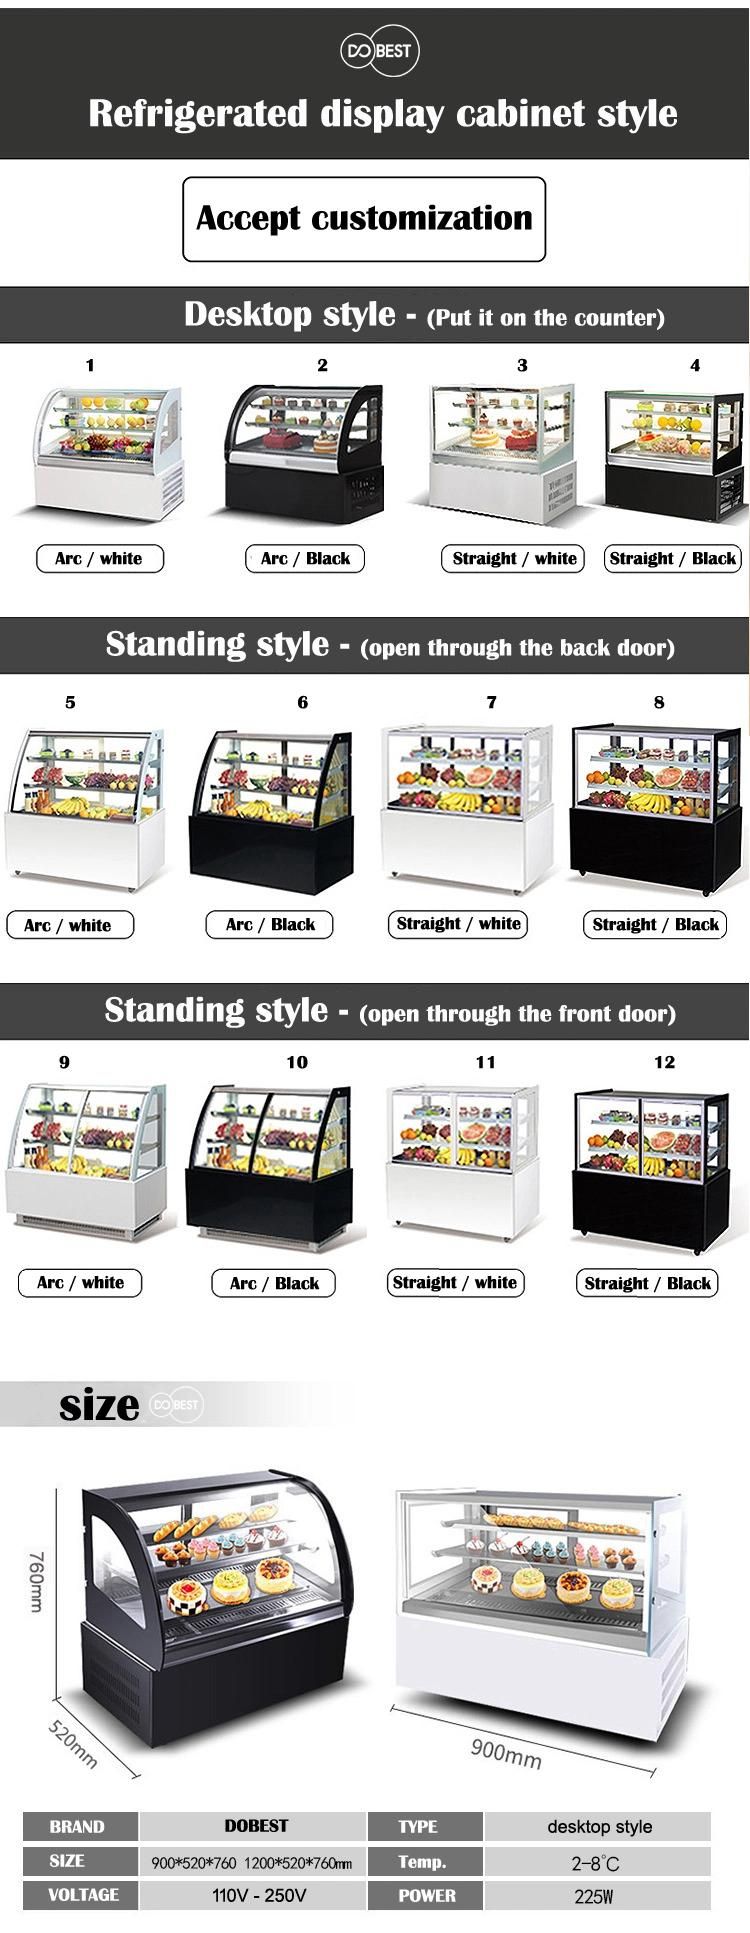 Commercial Cake Showcase Drawer Display/3 Shelves Cake Chiller Display Refrigerator Cabinet